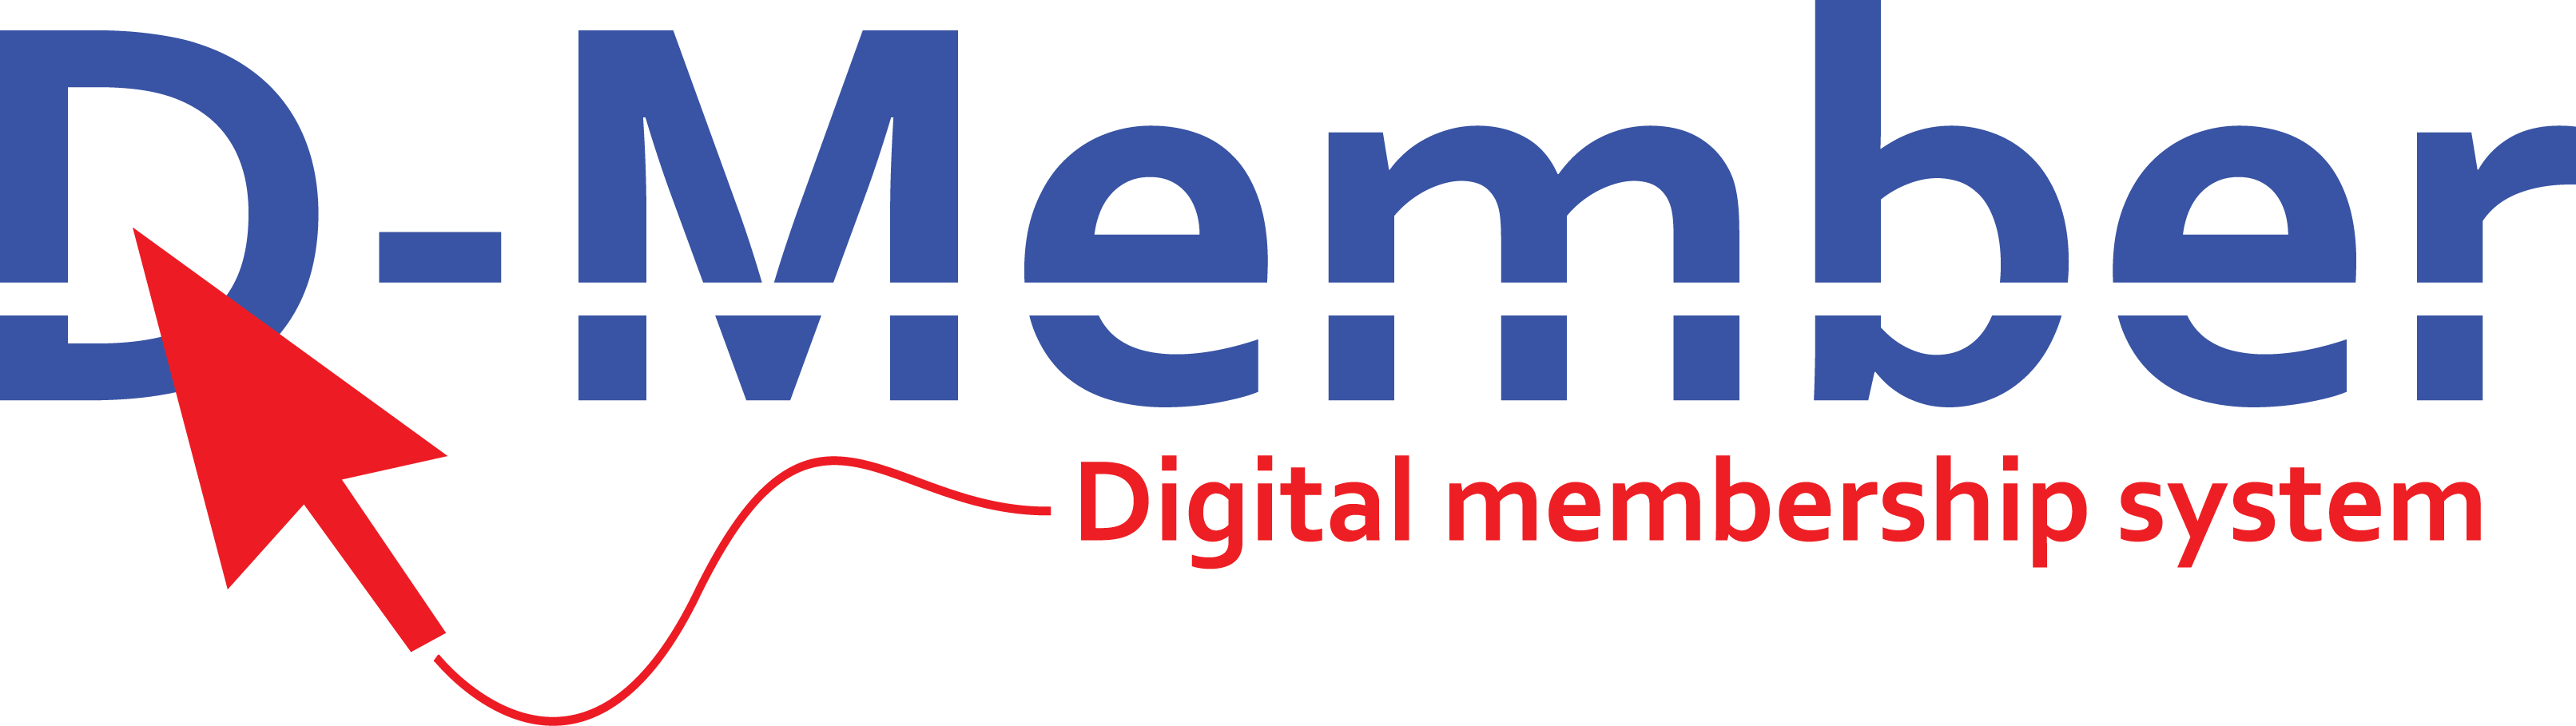 Logo D-MEMBER